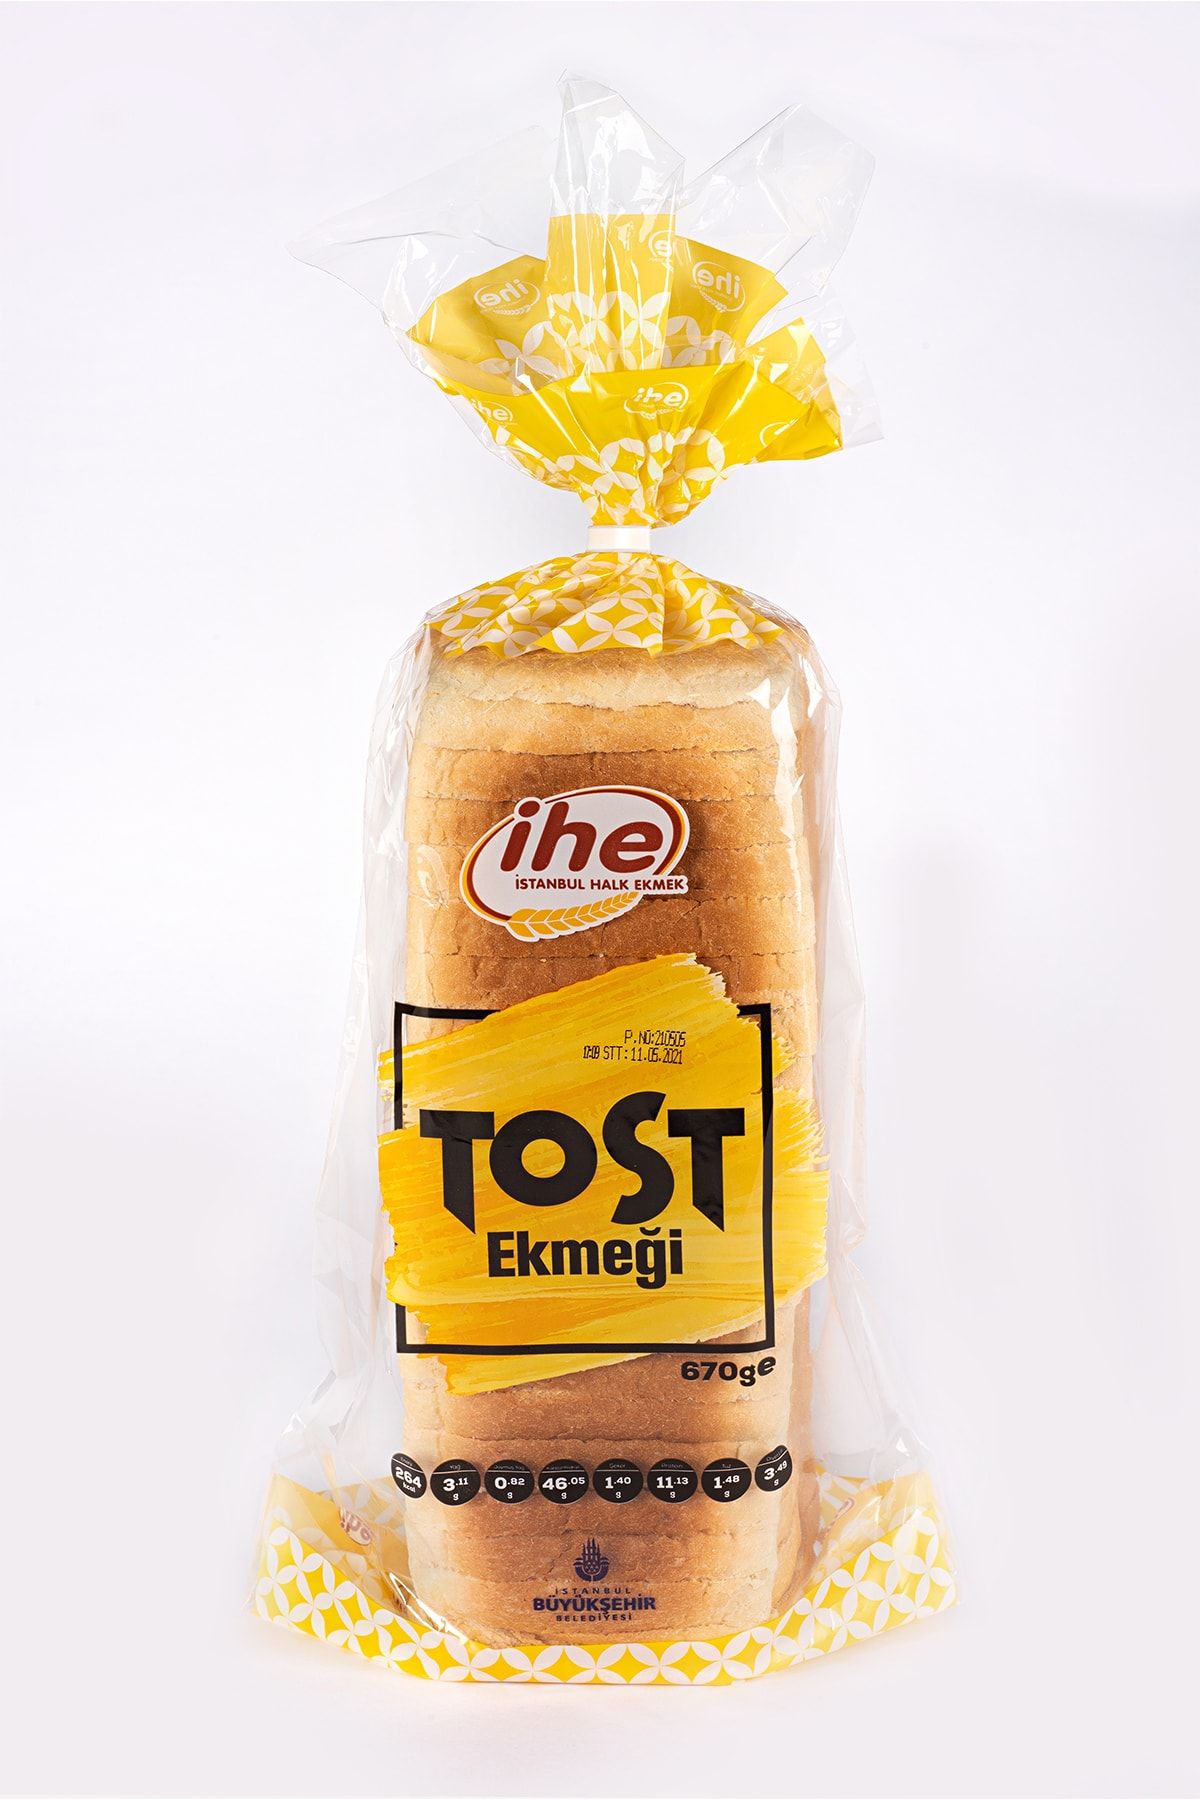 İhe Tost Ekmeği 670 g